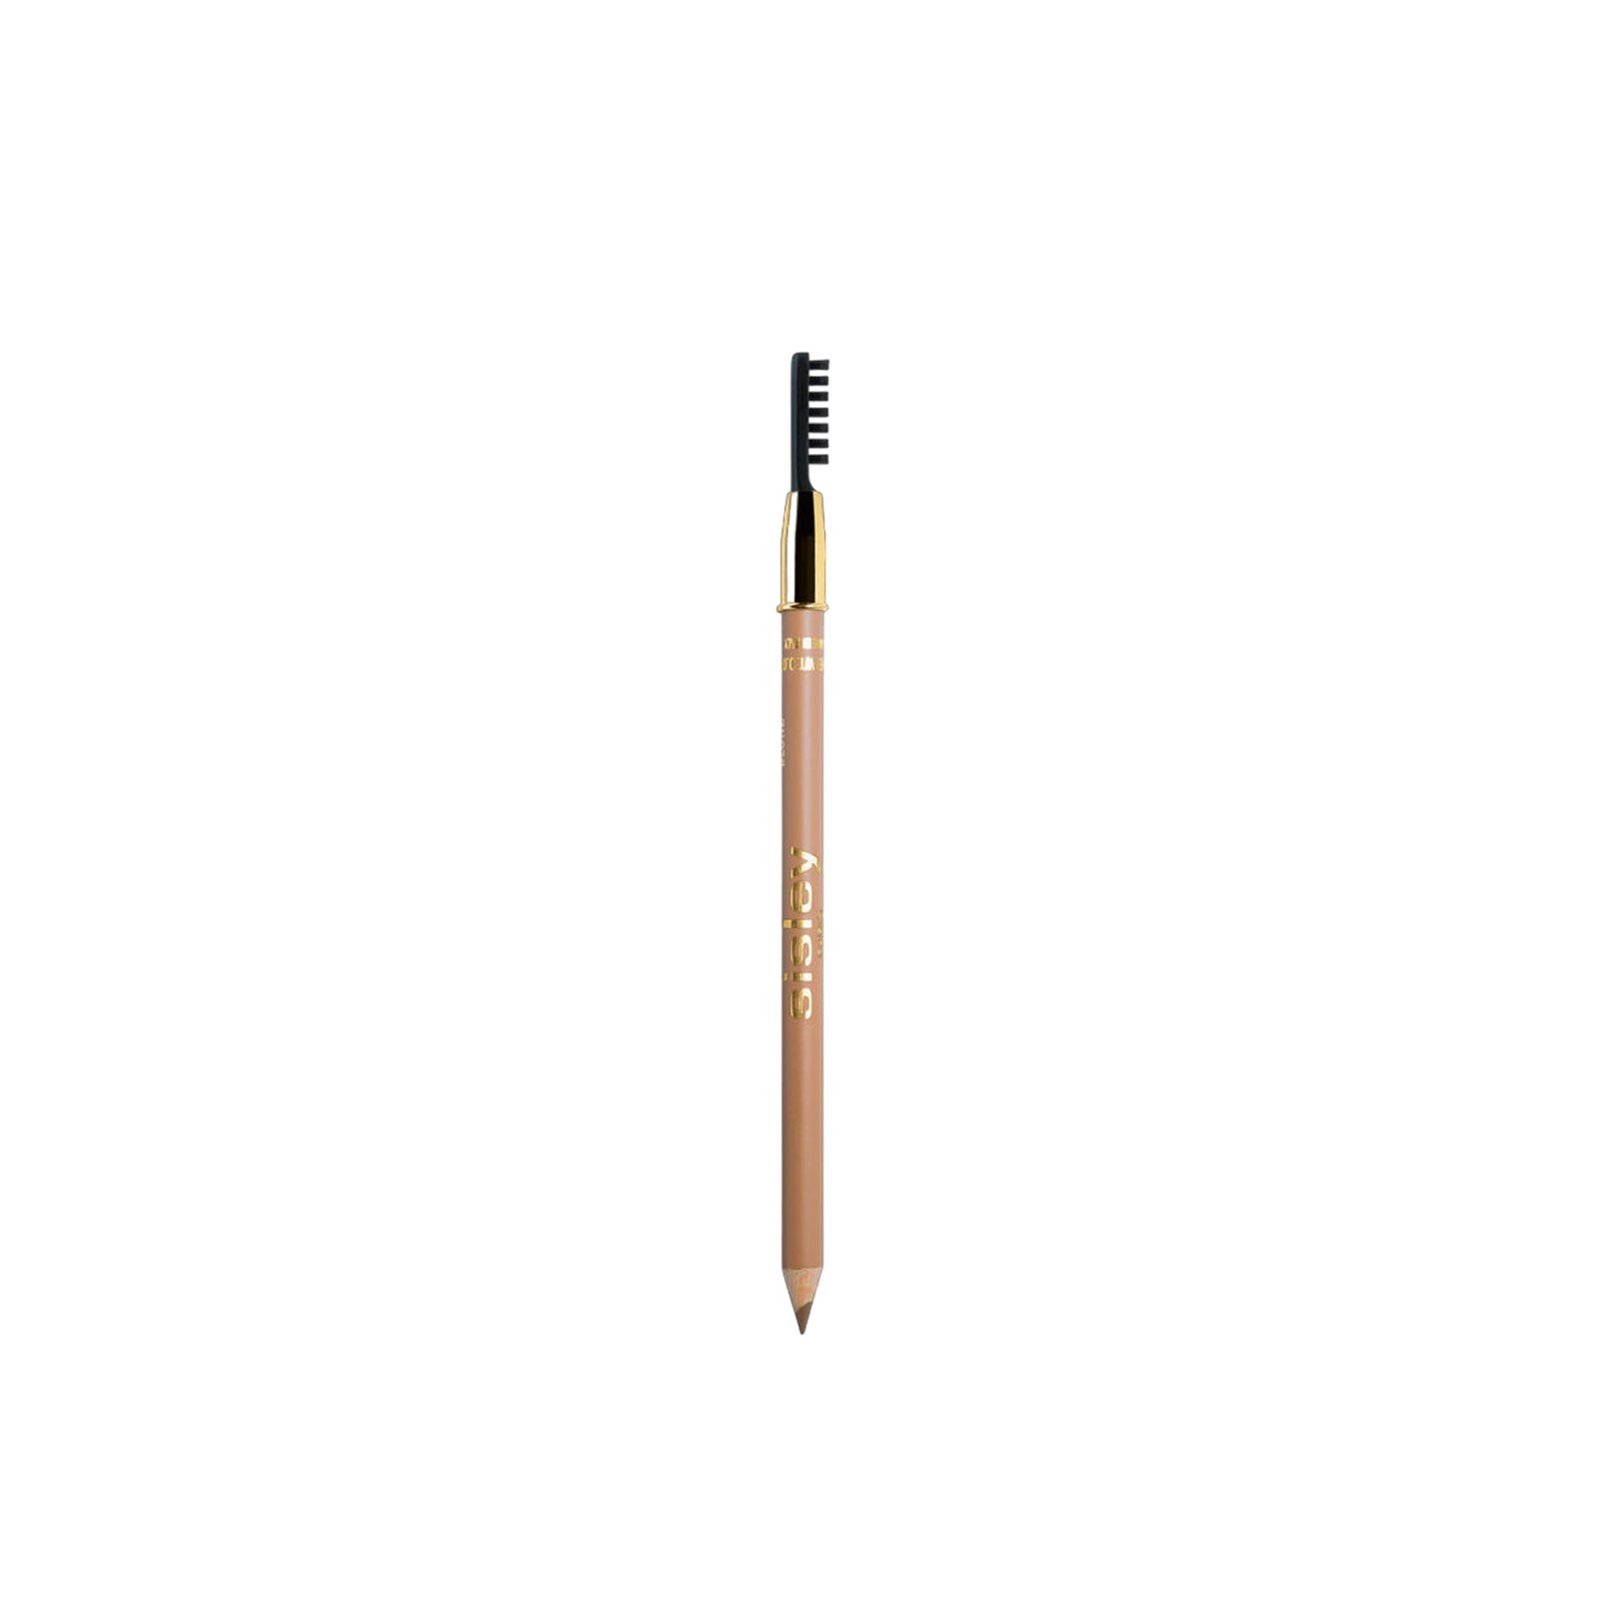 Sisley Paris Phyto Sourcils Perfect Eyeliner Pencil 1 Blond 0.55g (0.55g)